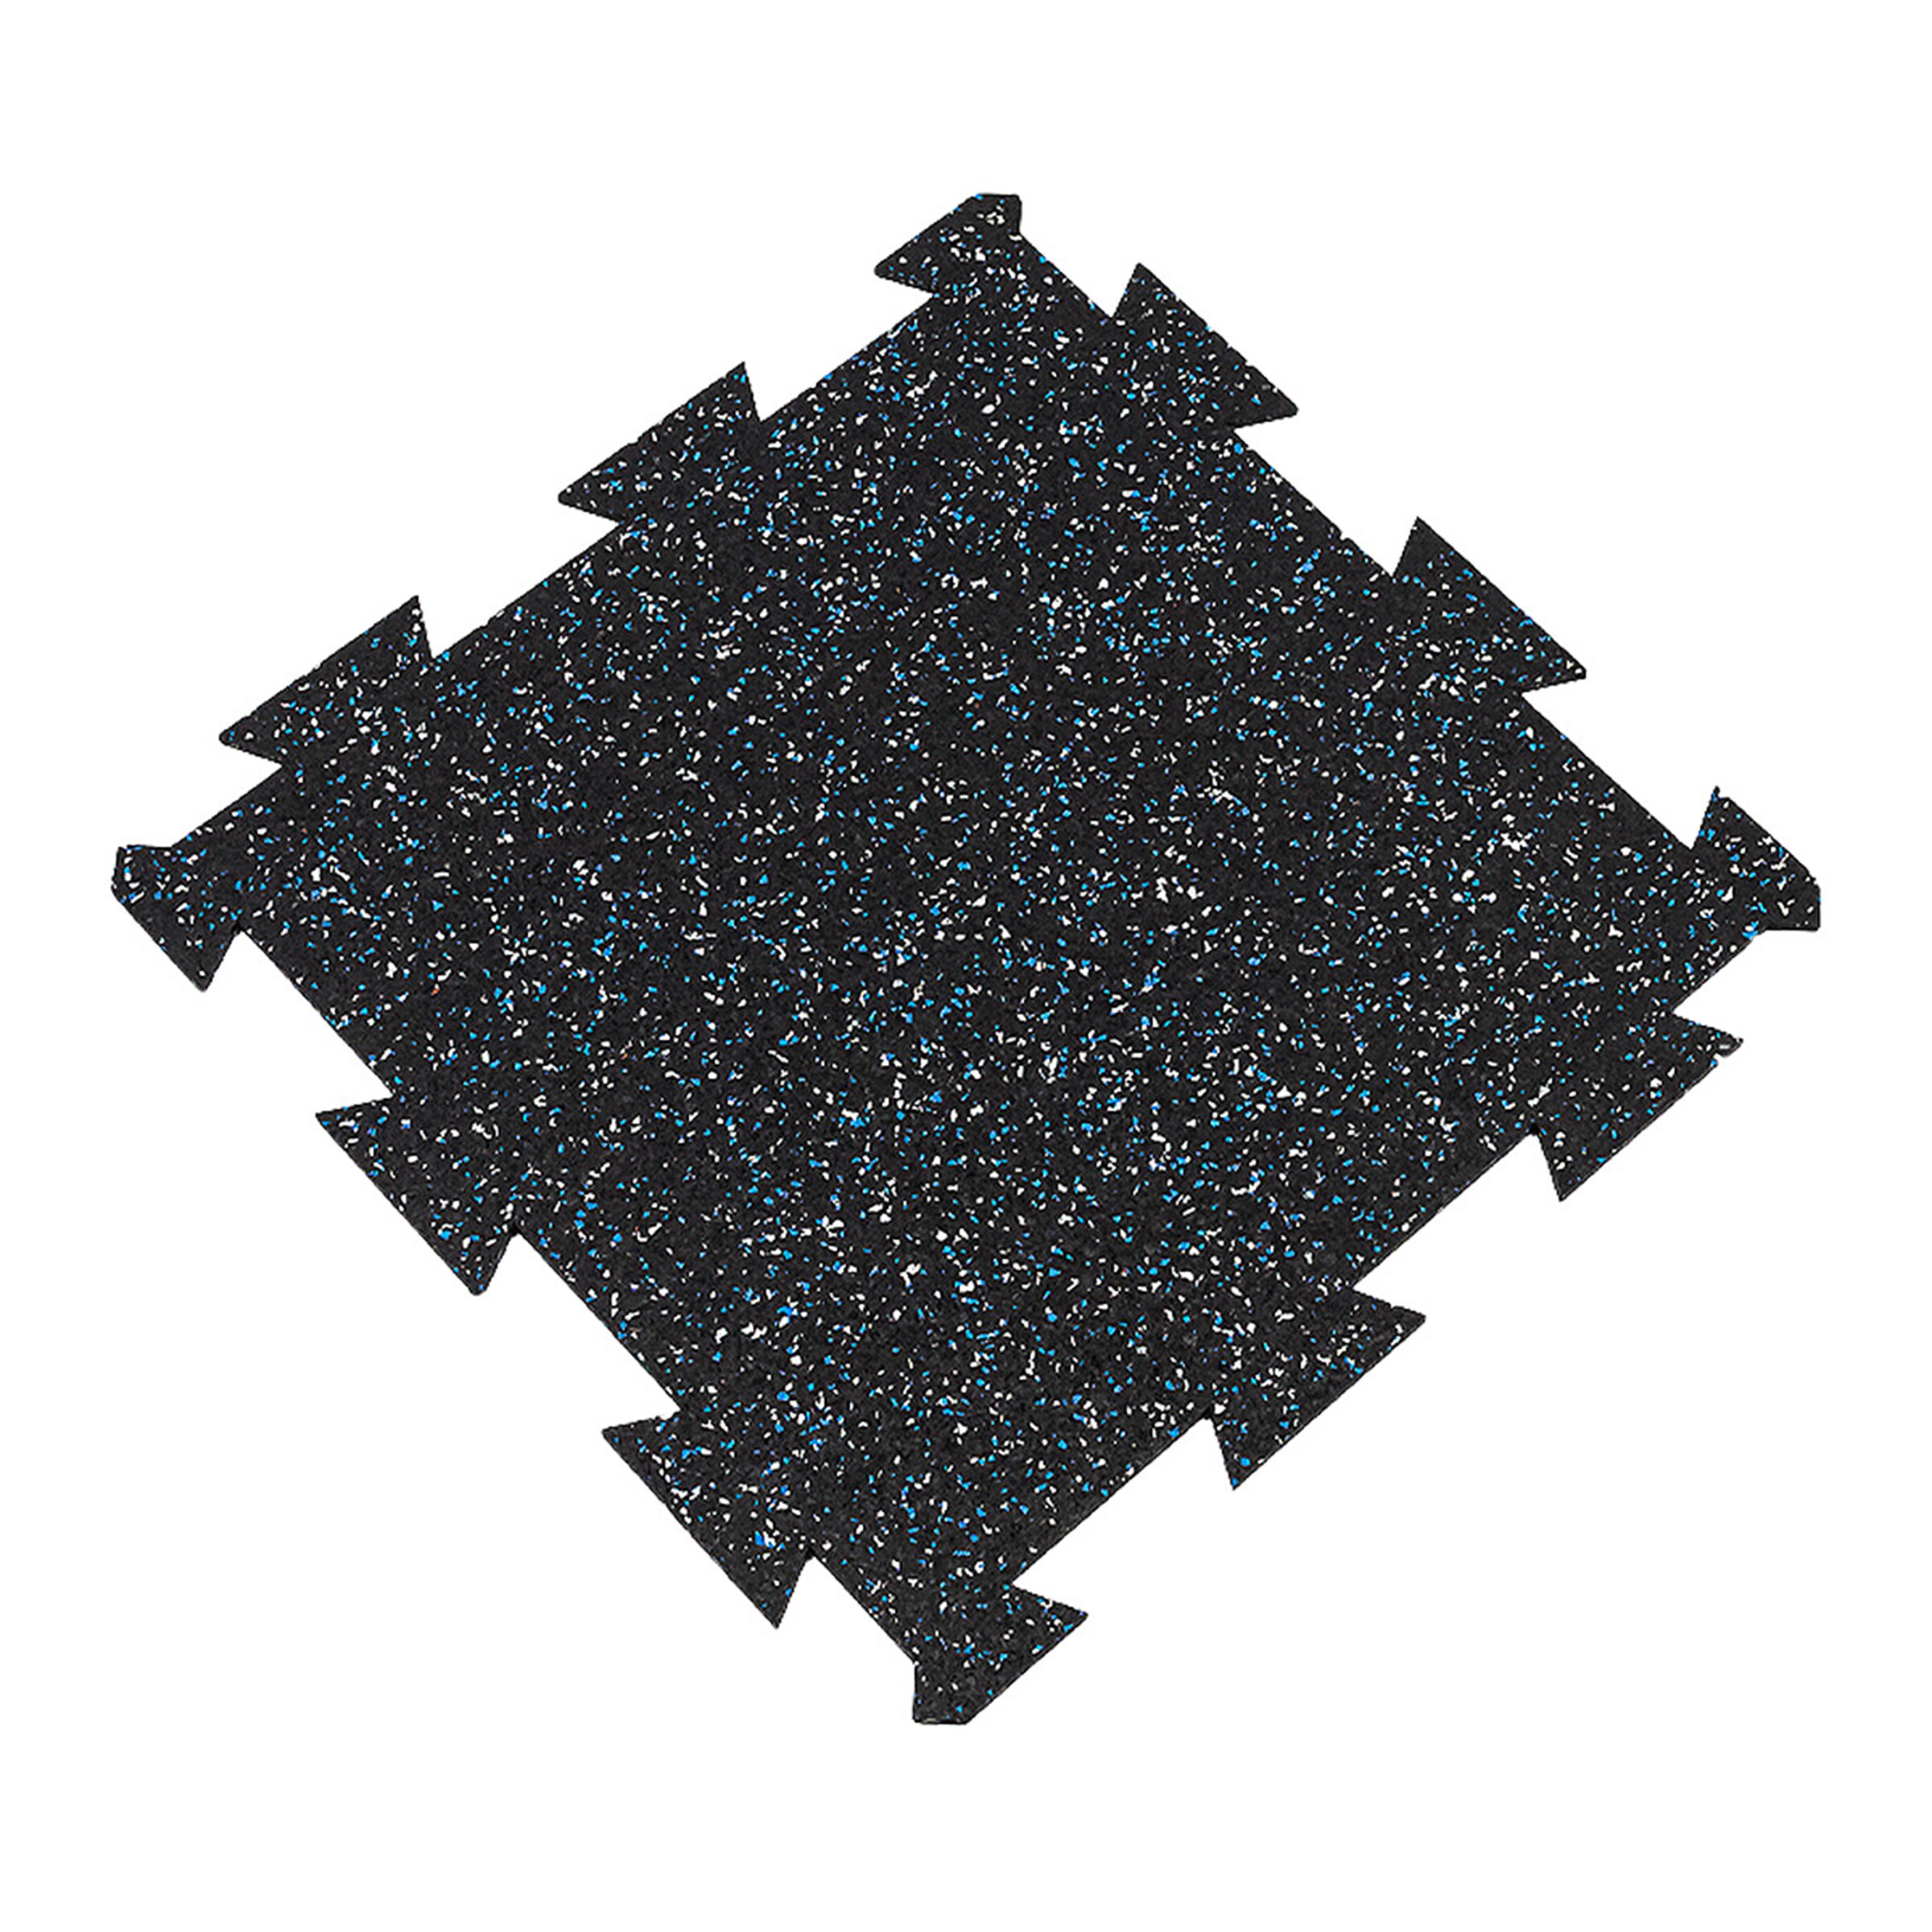 Černo-bílo-modrá gumová puzzle modulová dlaždice (střed) FLOMA SF1050 FitFlo - délka 50 cm, šířka 50 cm, výška 0,8 cm